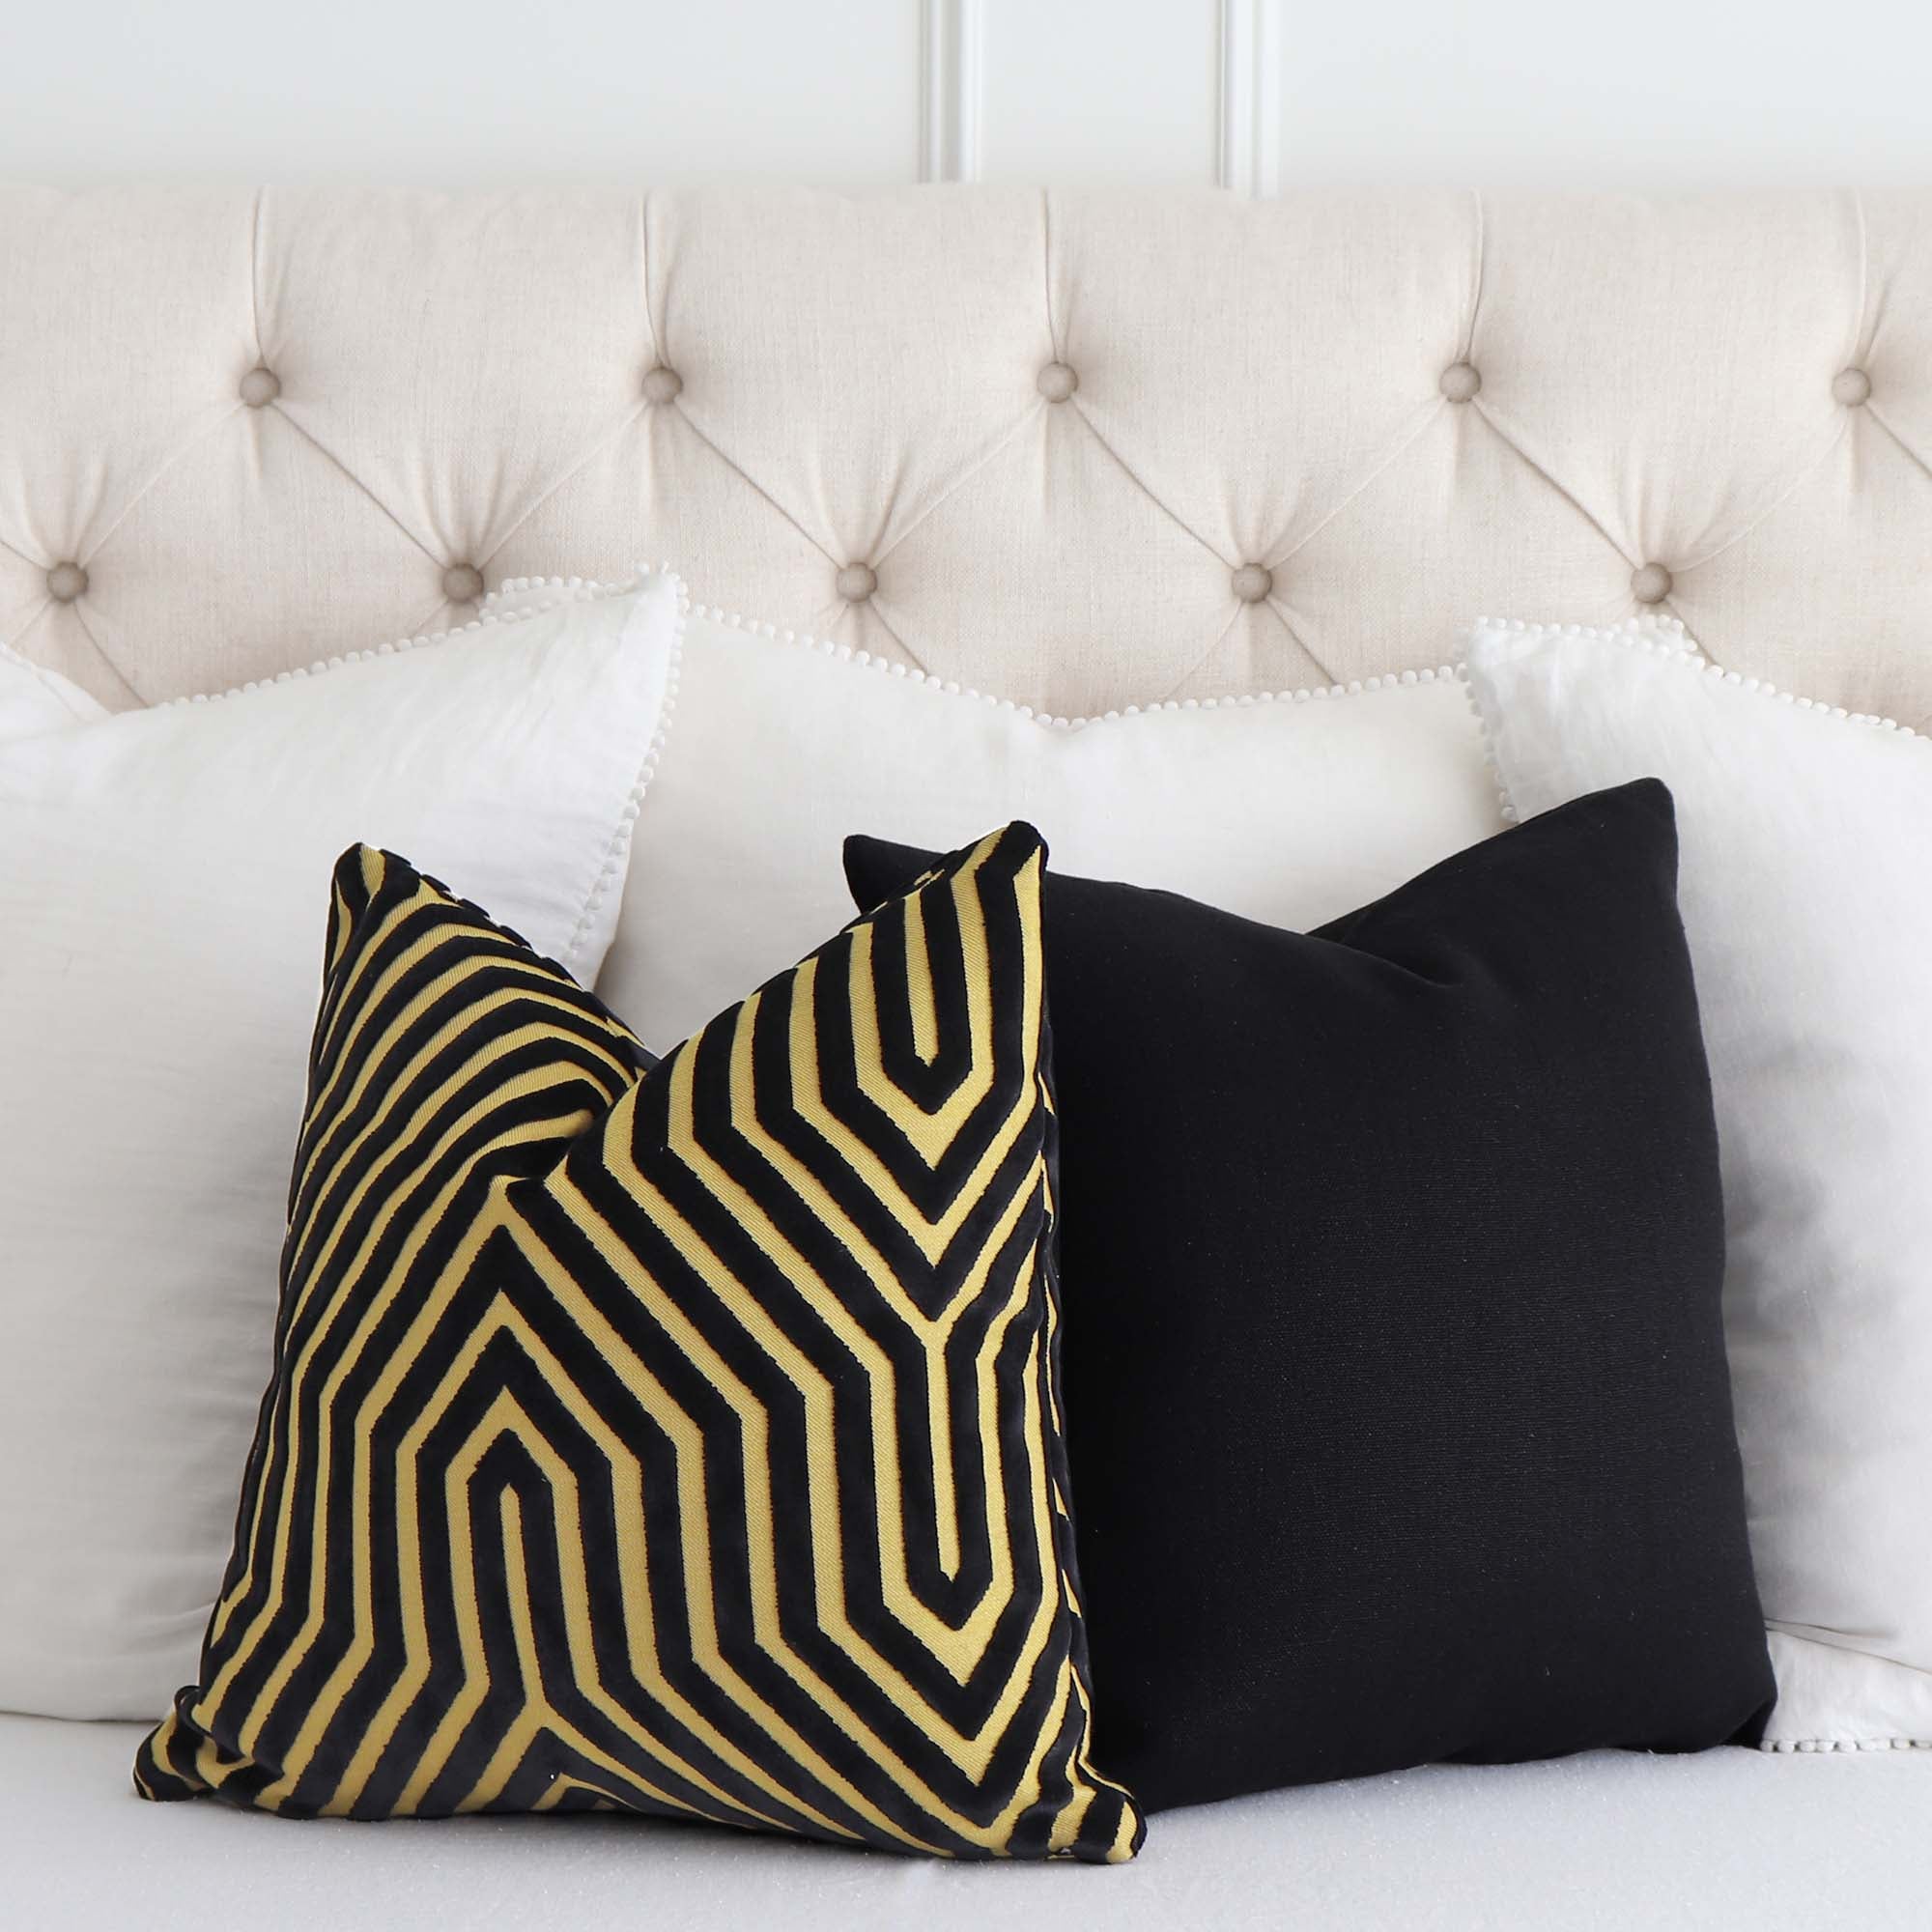 Schumacher Vanderbilt Velvet Tortoise Black Gold Cut Velvet Designer Luxury Decorative Throw Pillow Cover with Complementing Throw Pillow on Bed